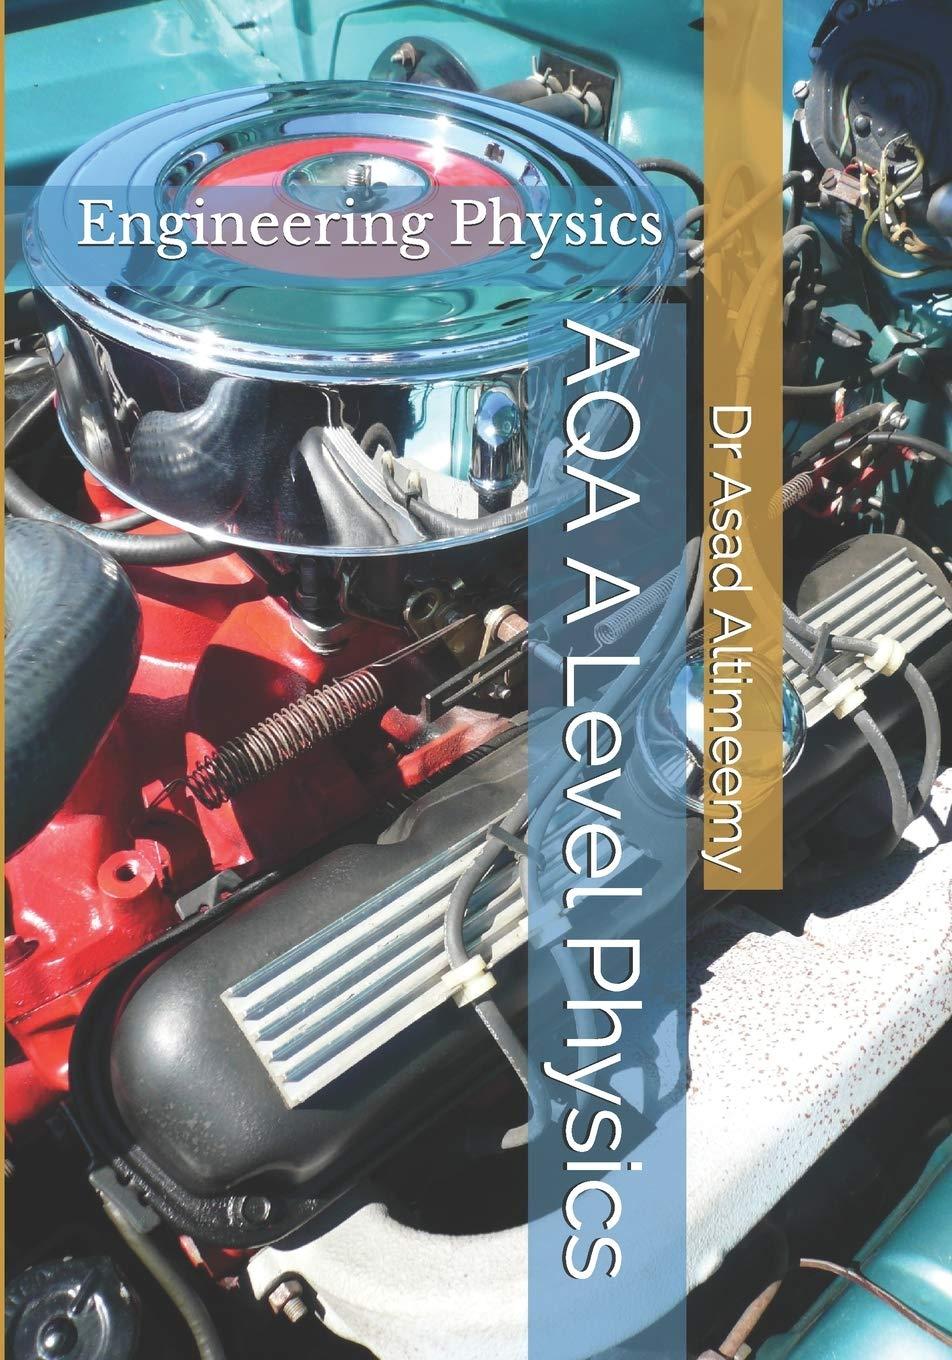 aqa a level physics engineering physics 1st edition asad altimeemy 1797637622, 978-1797637624